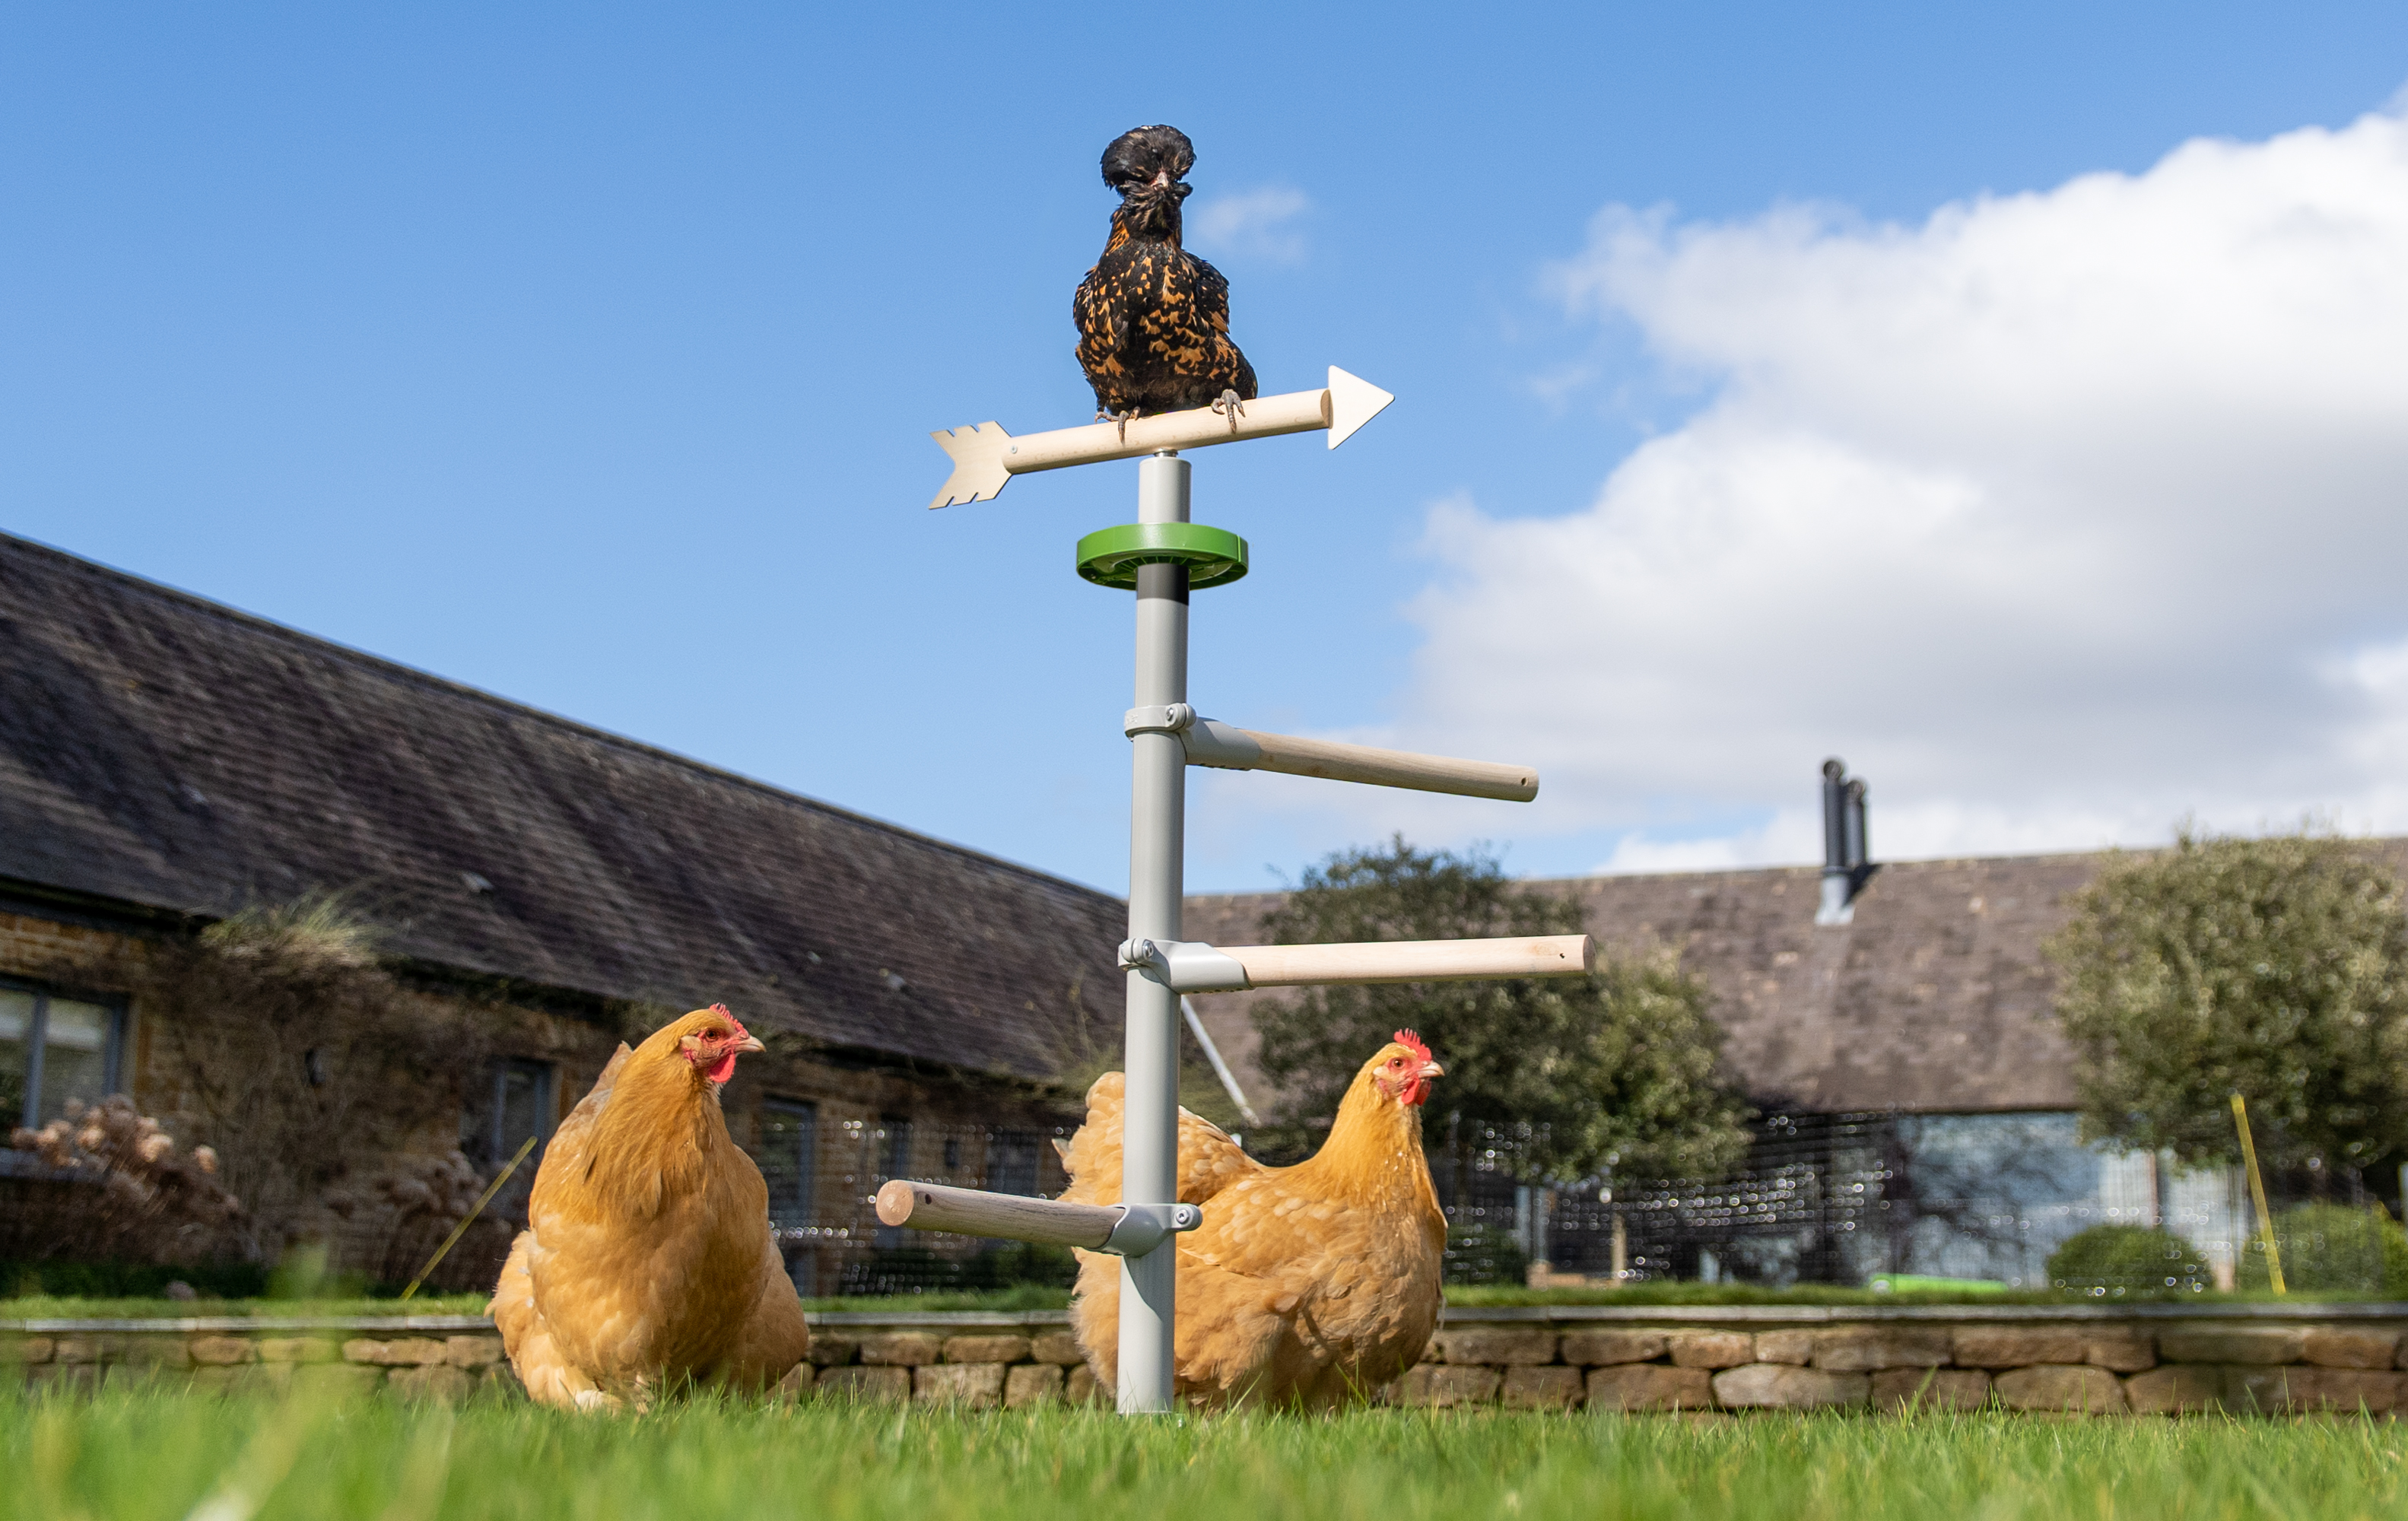 Hens using the Omlet Freestanding Chicken Perch